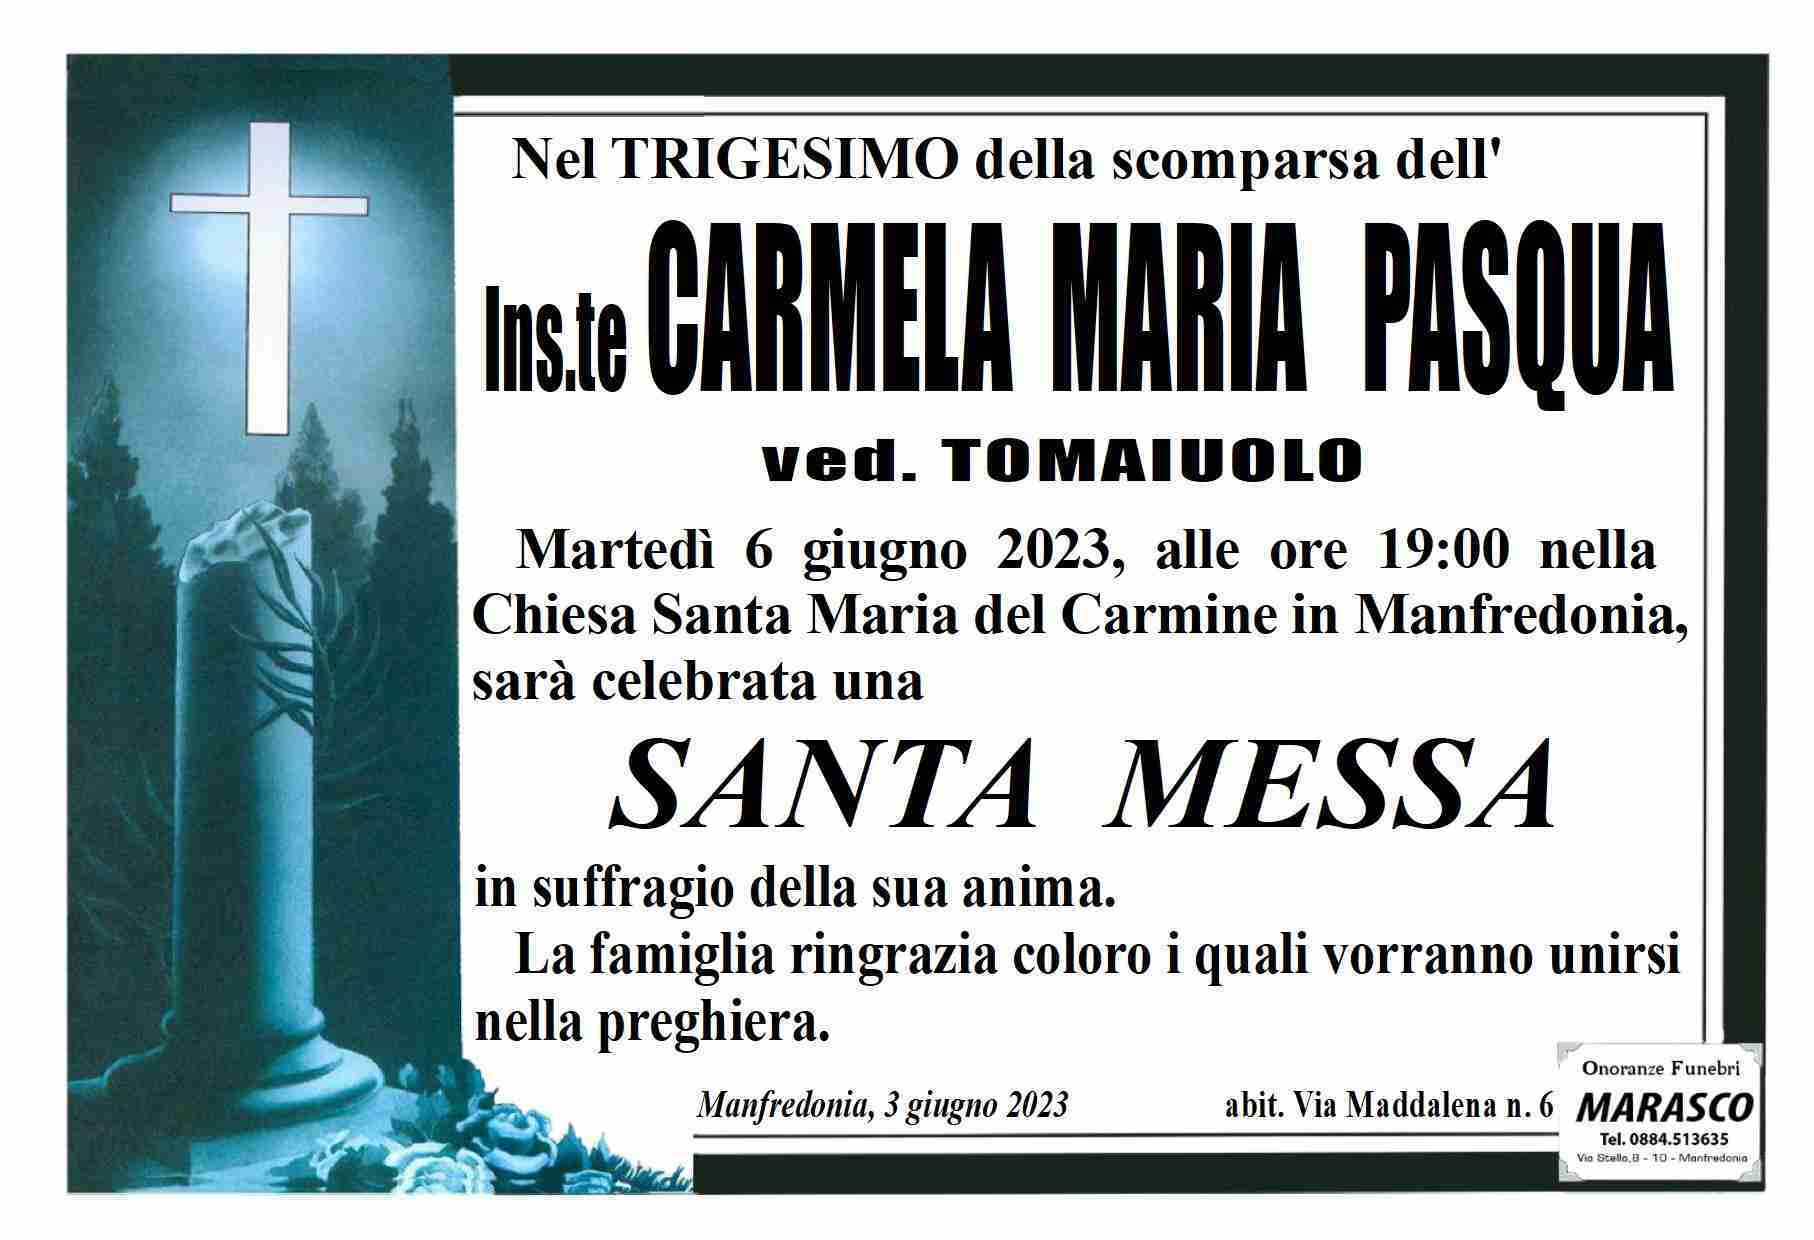 Carmela Maria Pasqua